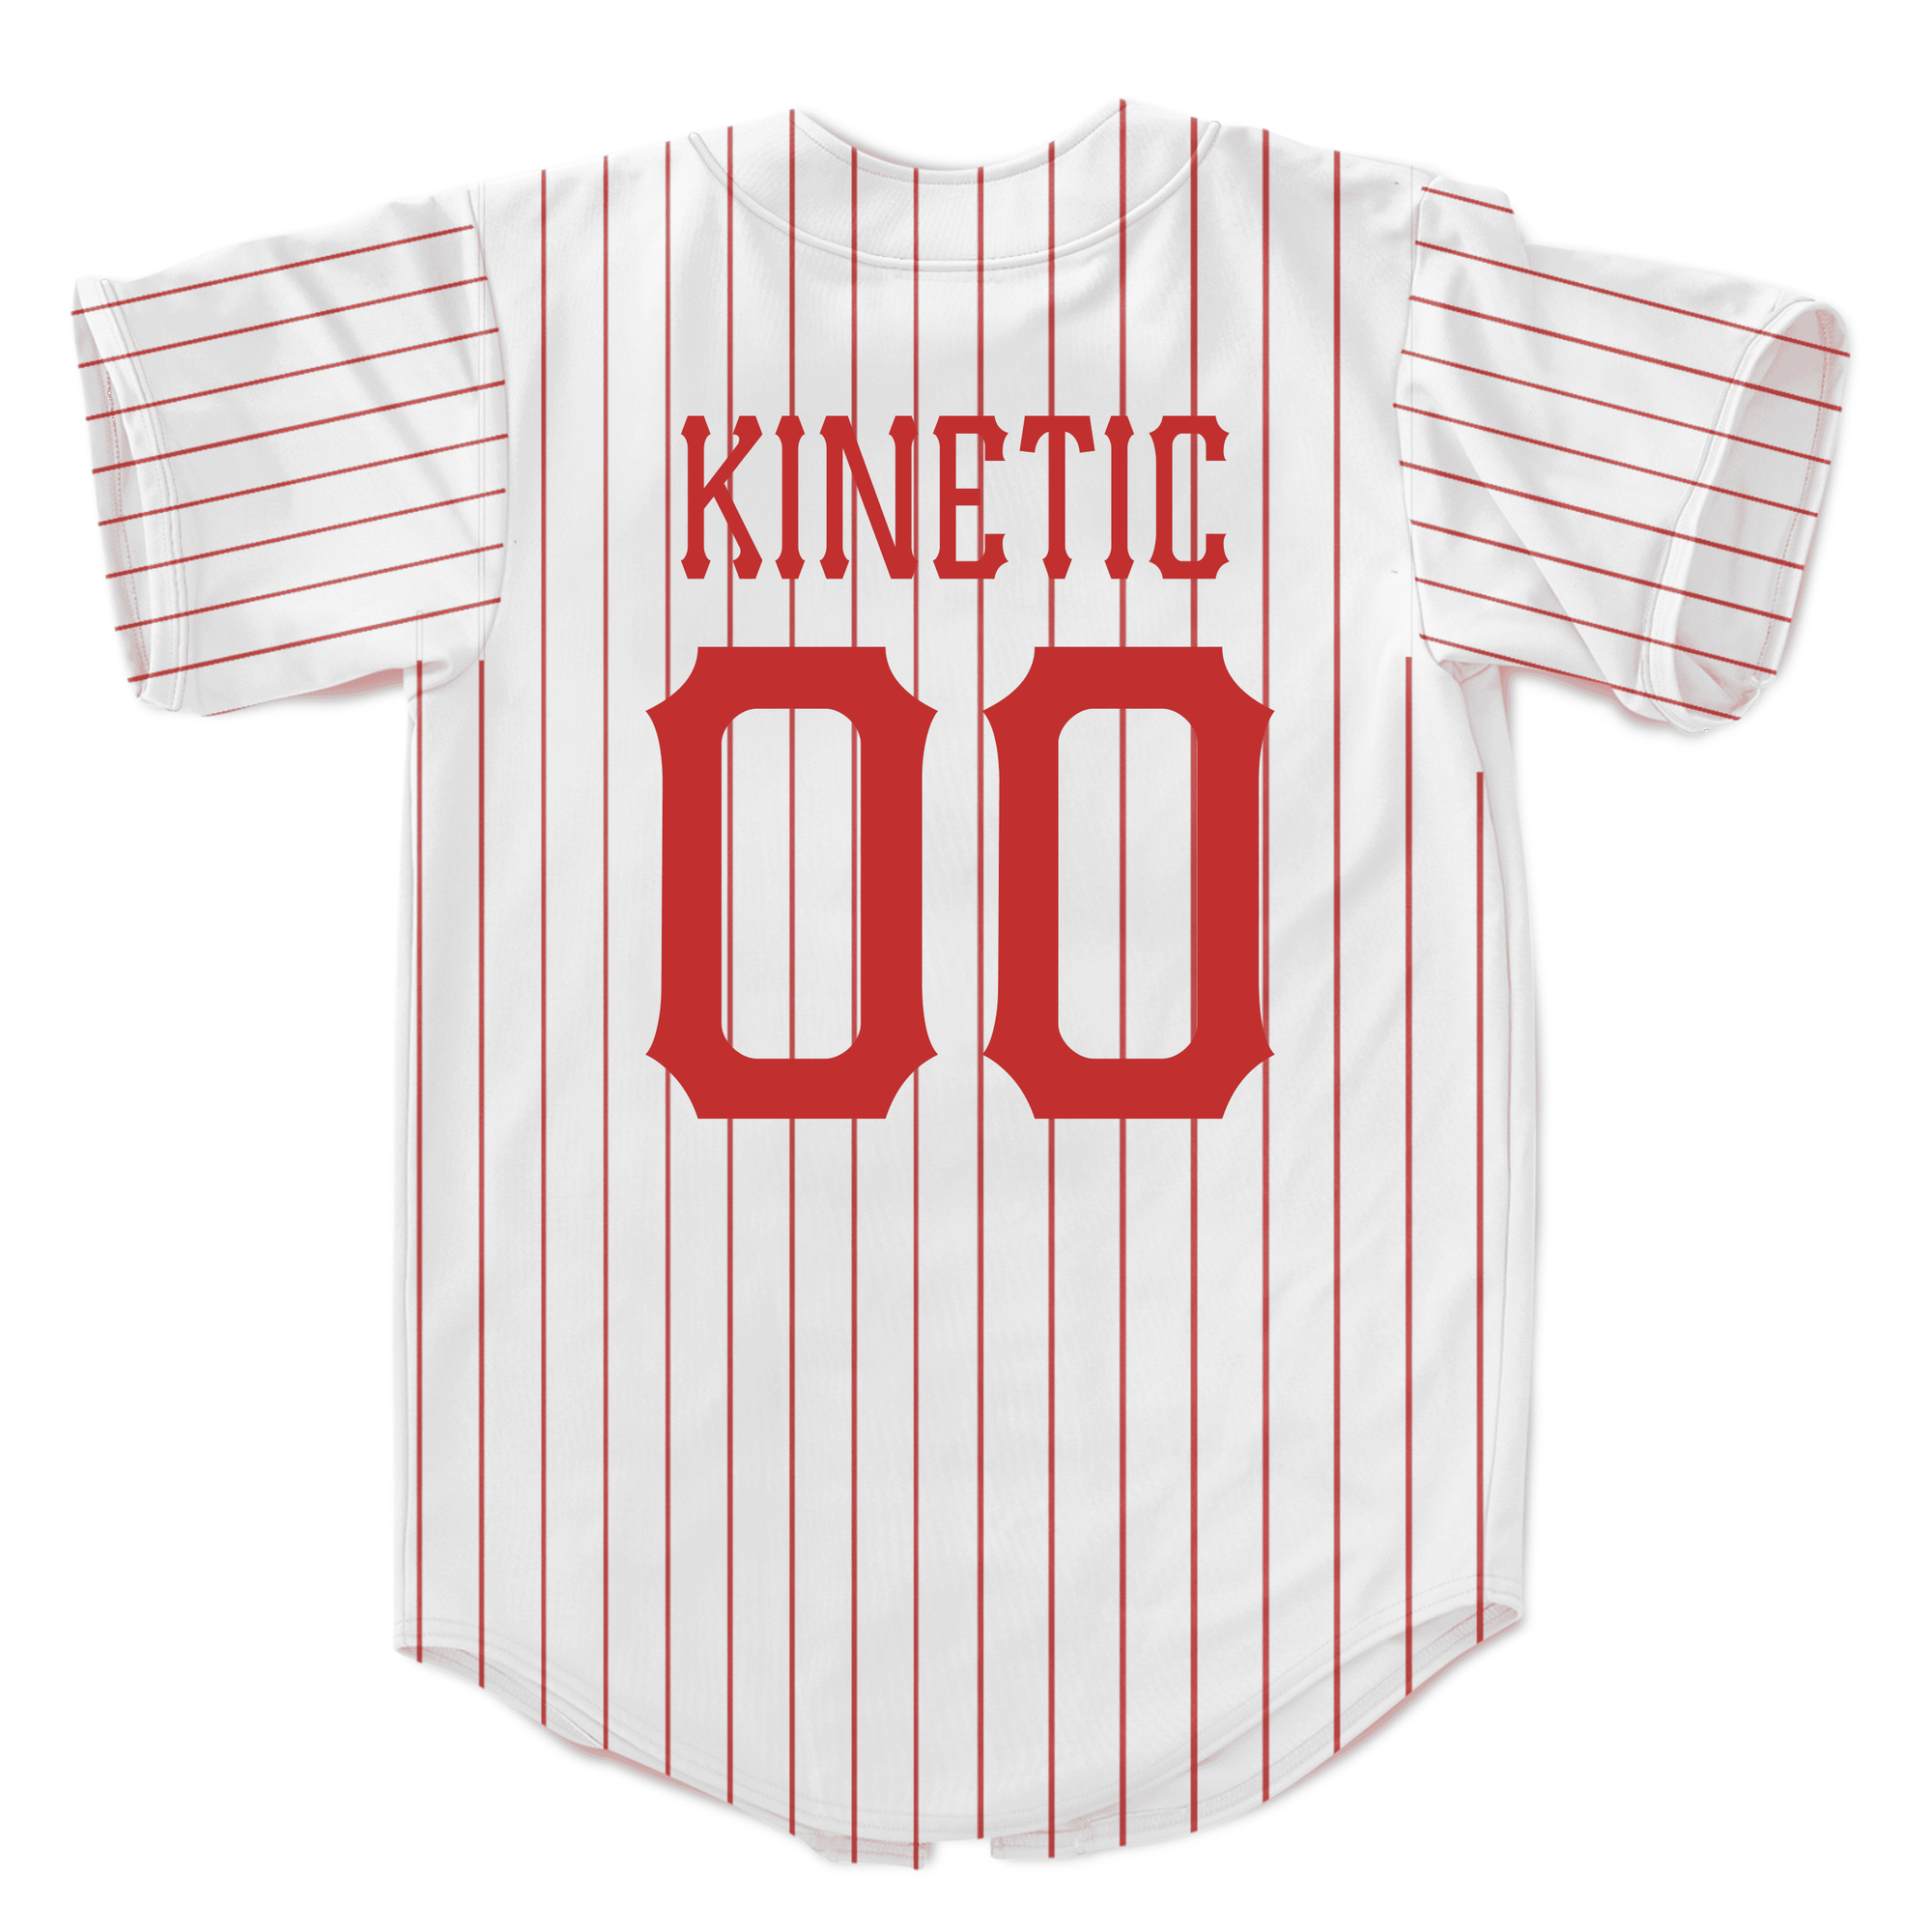 Phi Sigma Kappa - Red Pinstripe Baseball Jersey